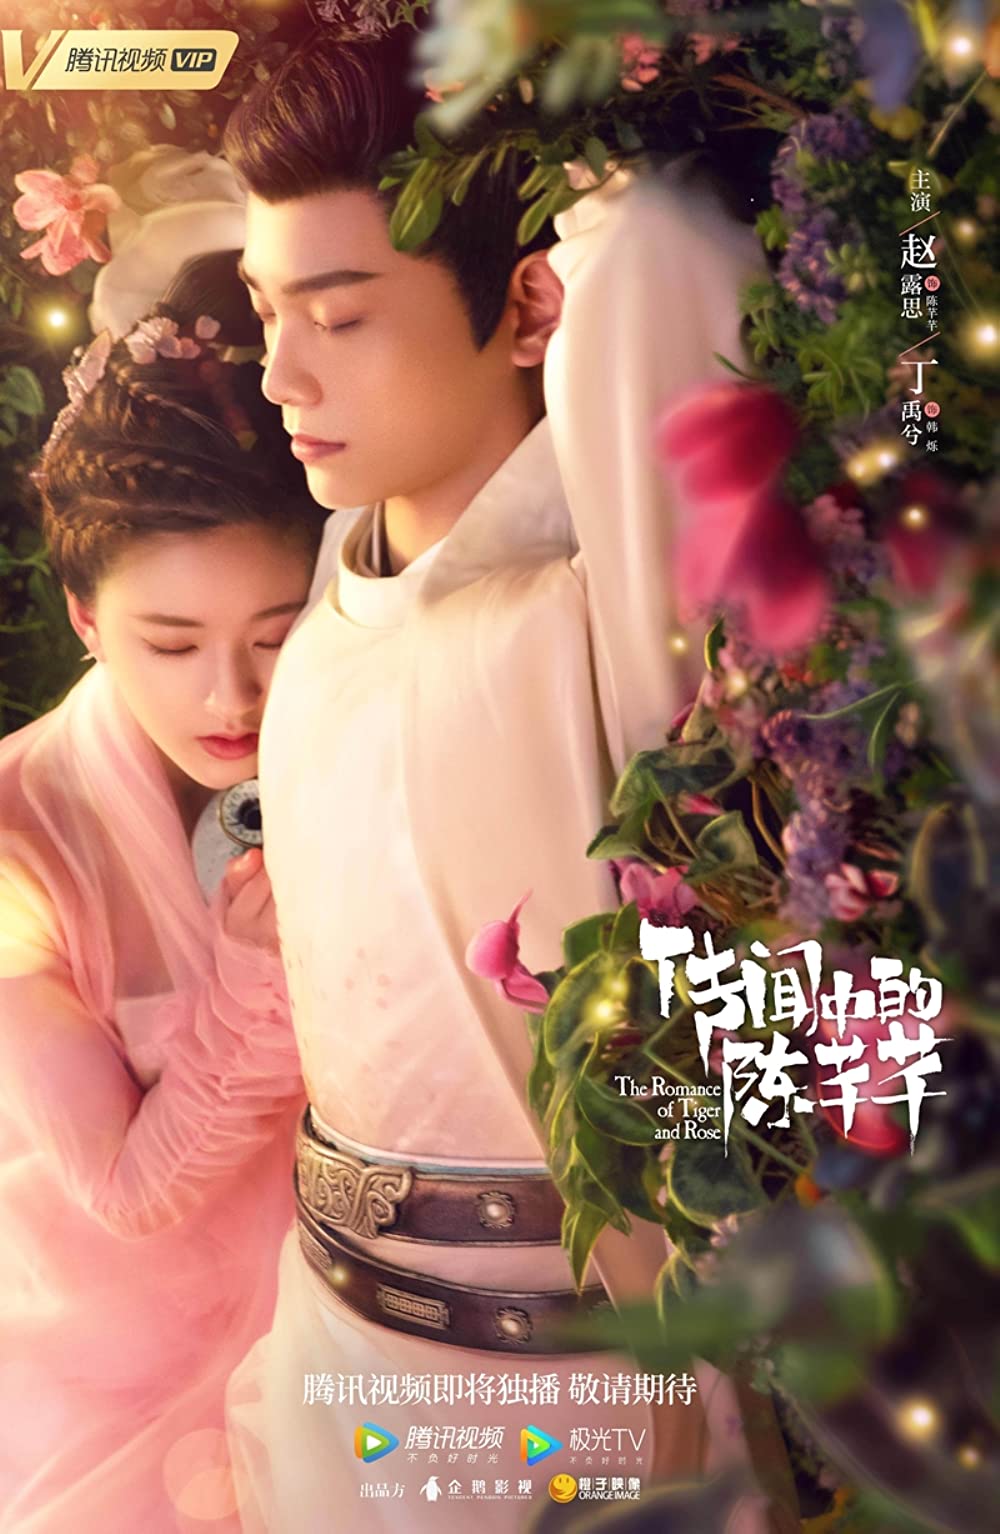 Chuyện Tình Hoa Hồng - The Romance of Tiger and Rose (2020)